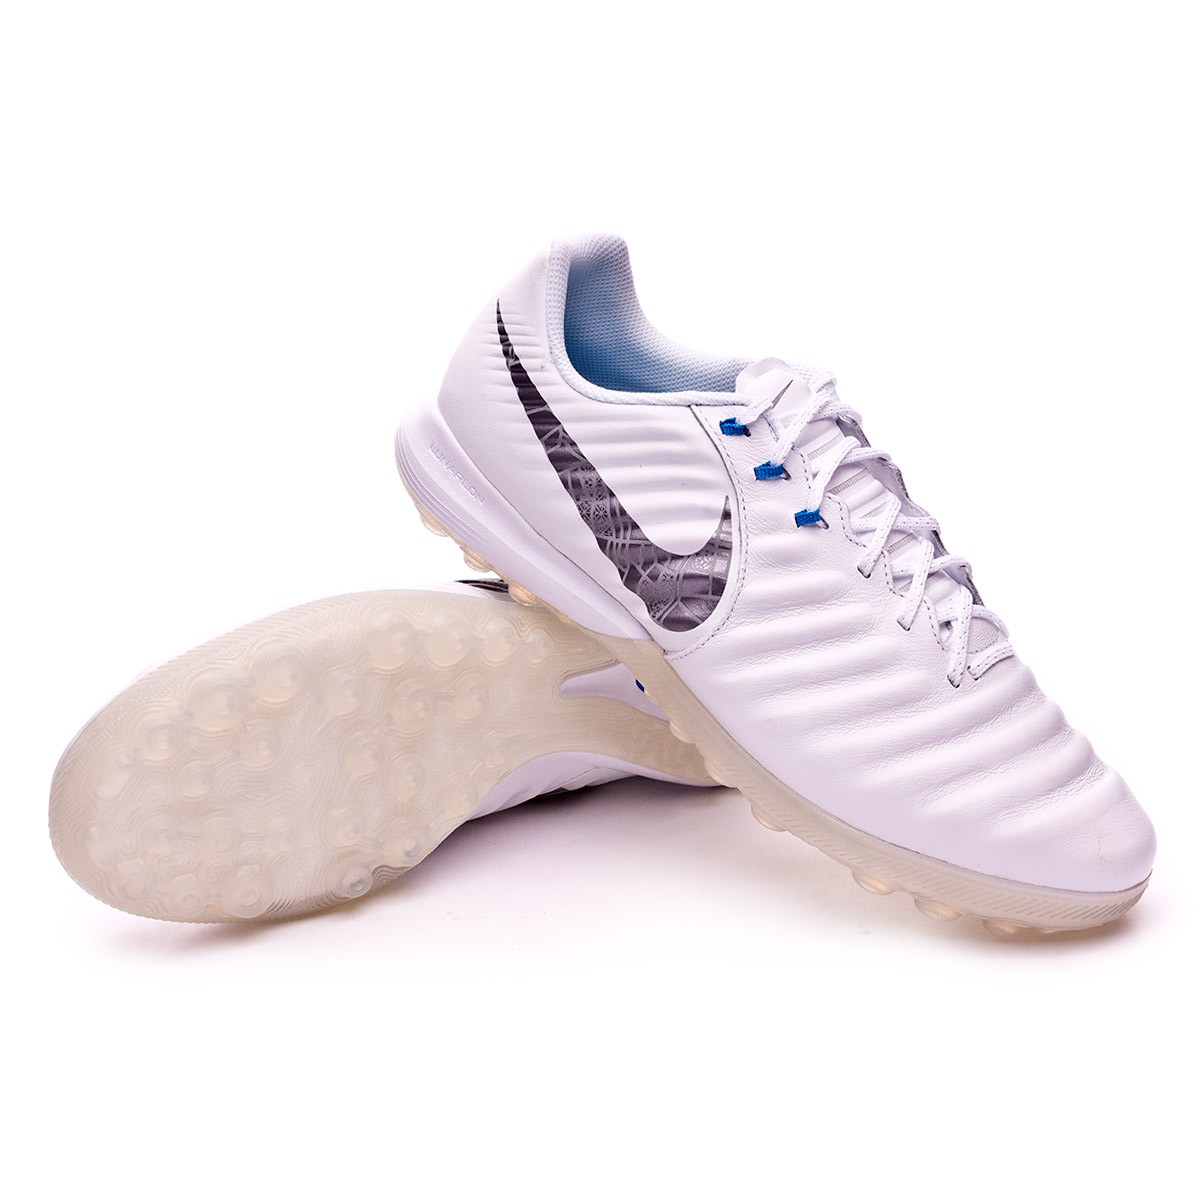 Tenis Nike Tiempo Lunar LegendX VII Pro Turf White-Metallic cool grey-Blue  hero - Tienda de fútbol Fútbol Emotion